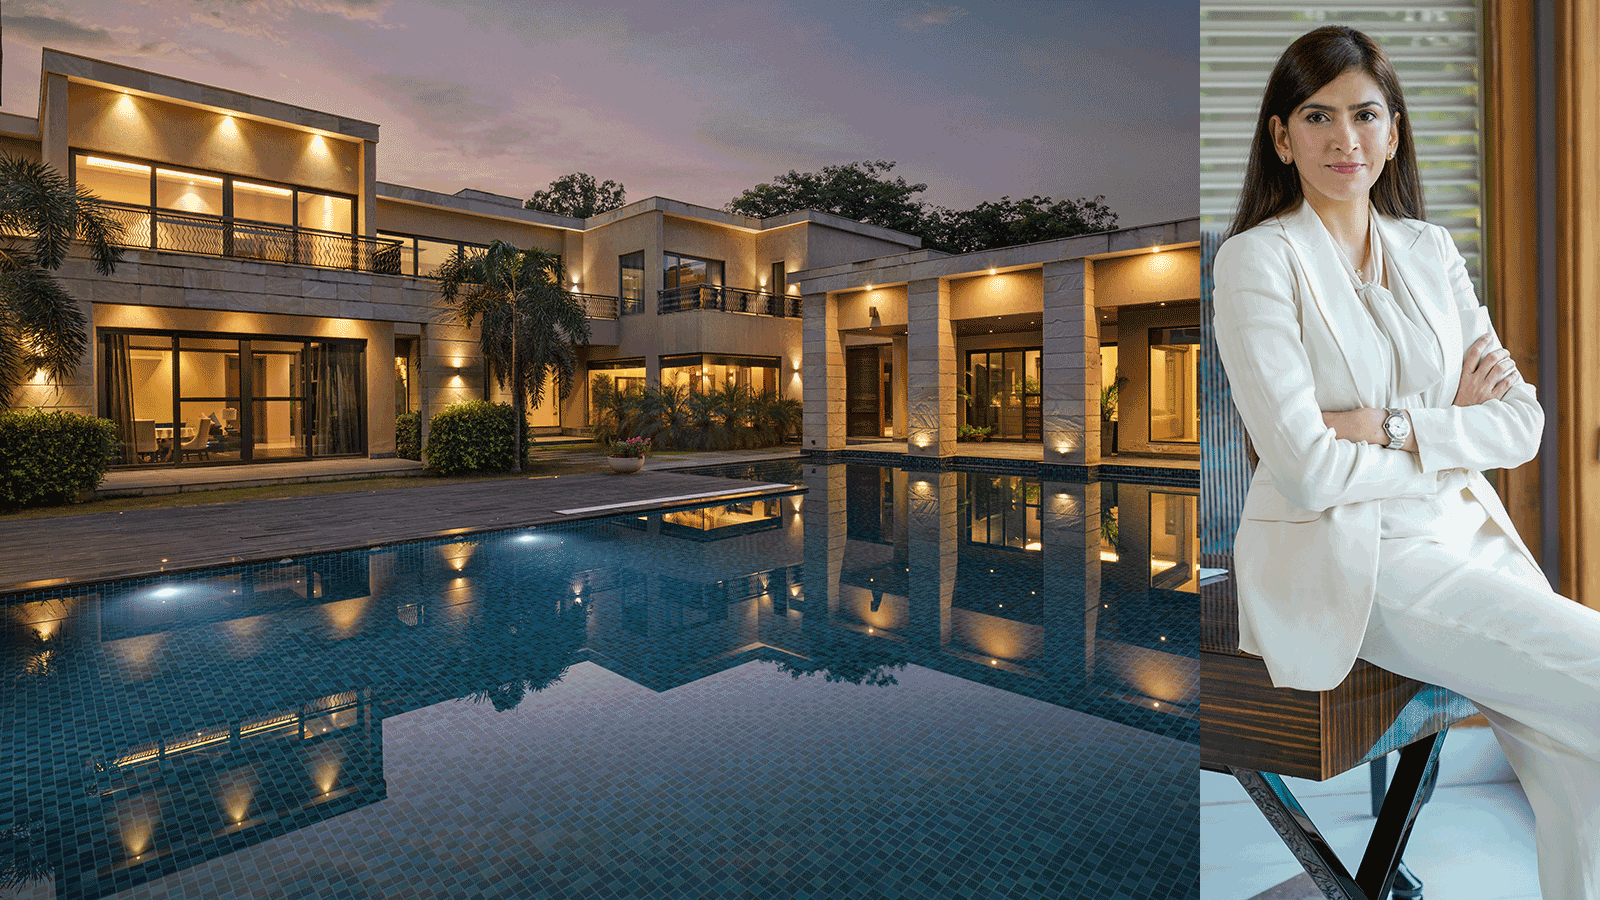 "Delhi luxury villa AparnaKaushikDesignGroup indiaartndesign"